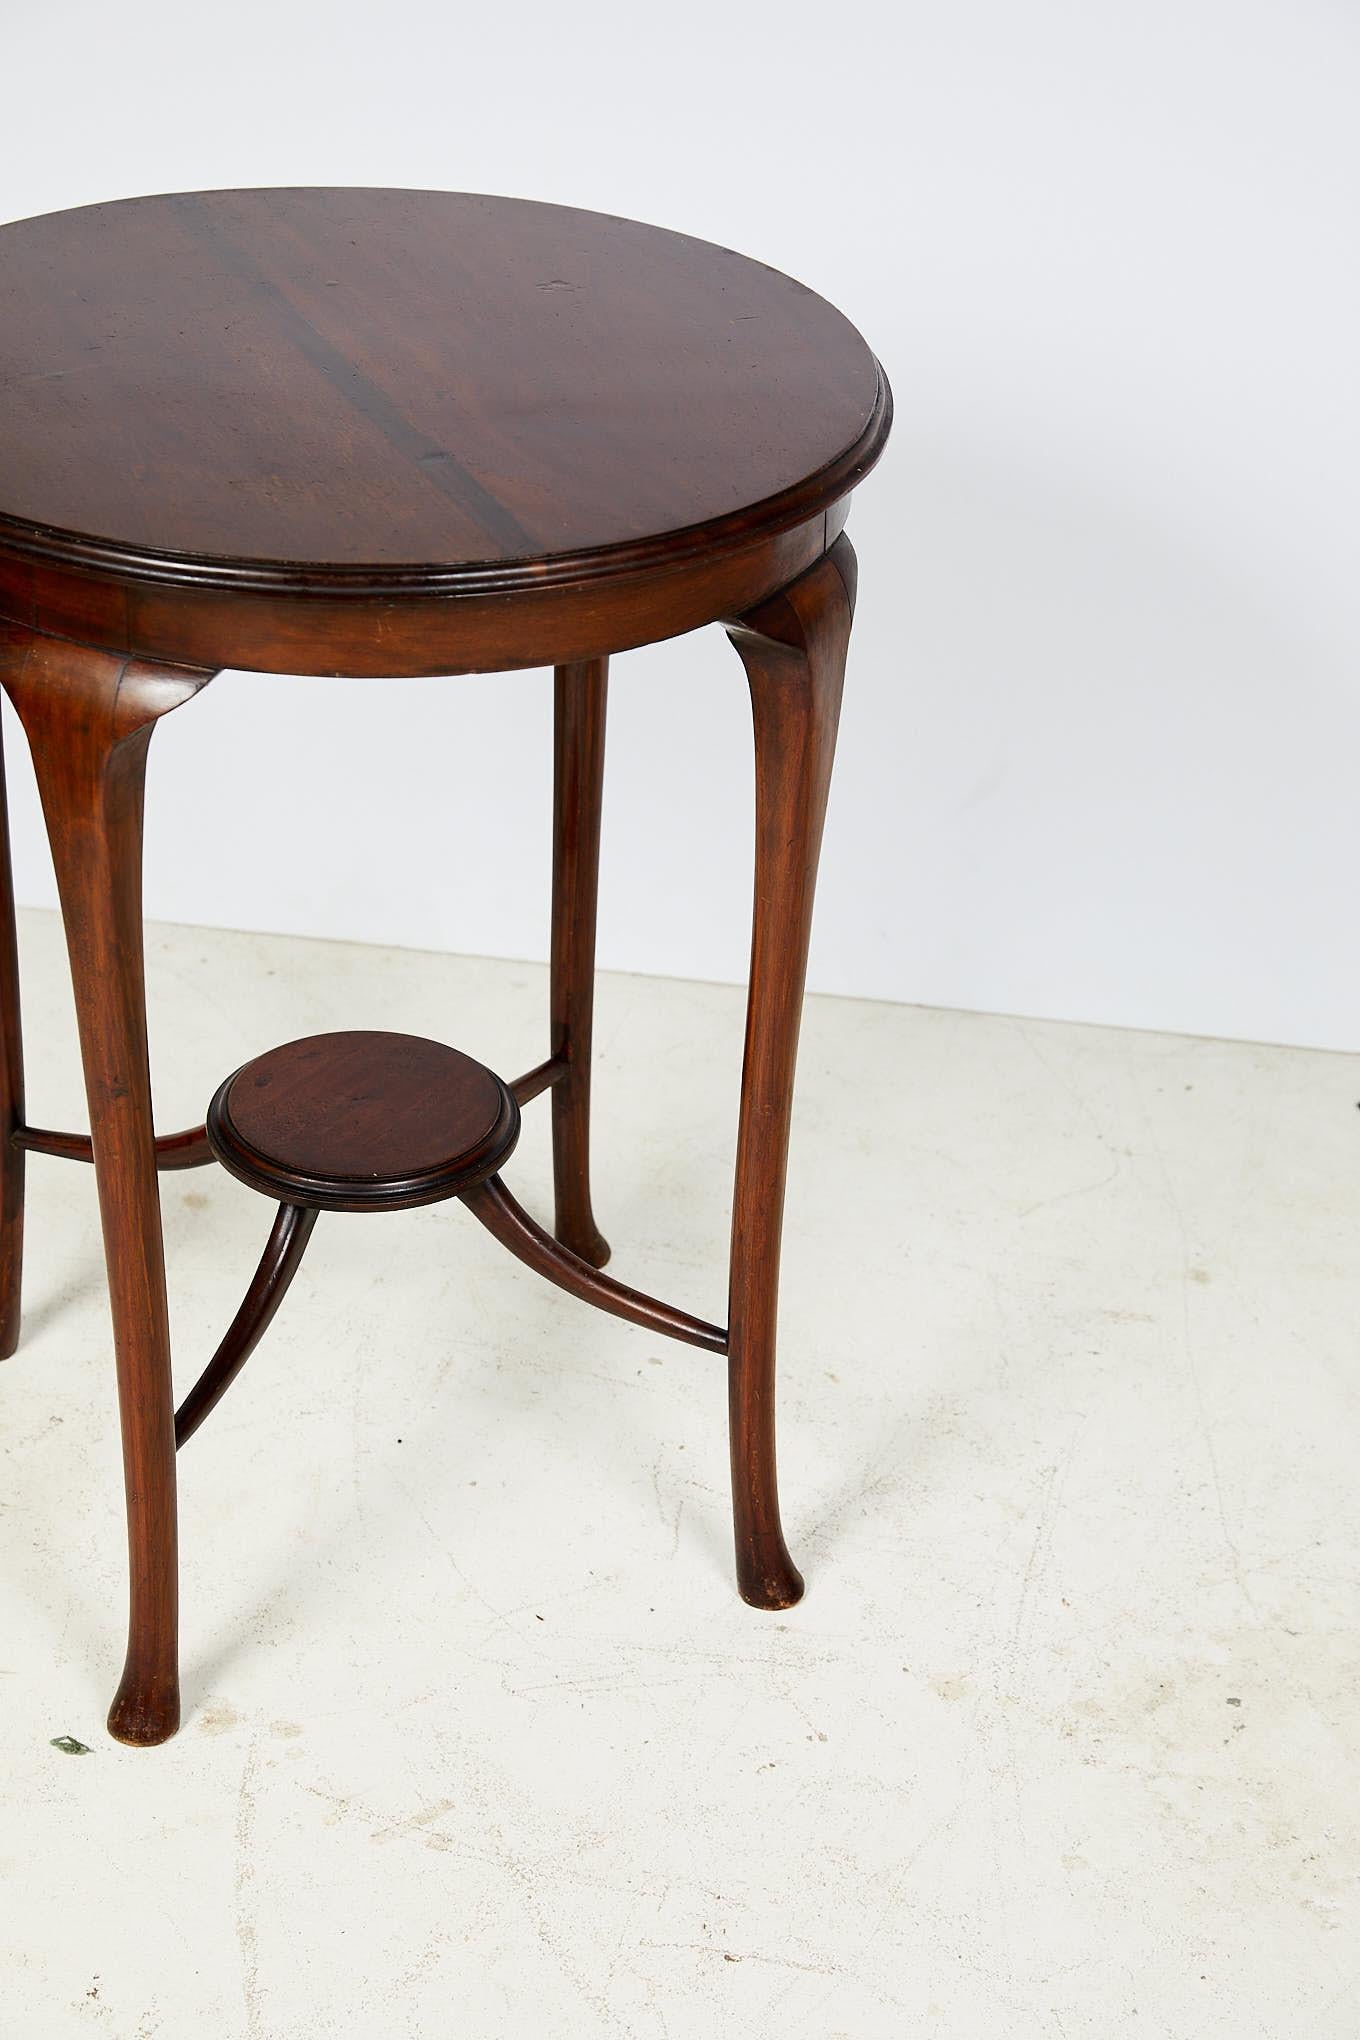 20th Century English Art Nouveau Round Tea Table of Mahogany